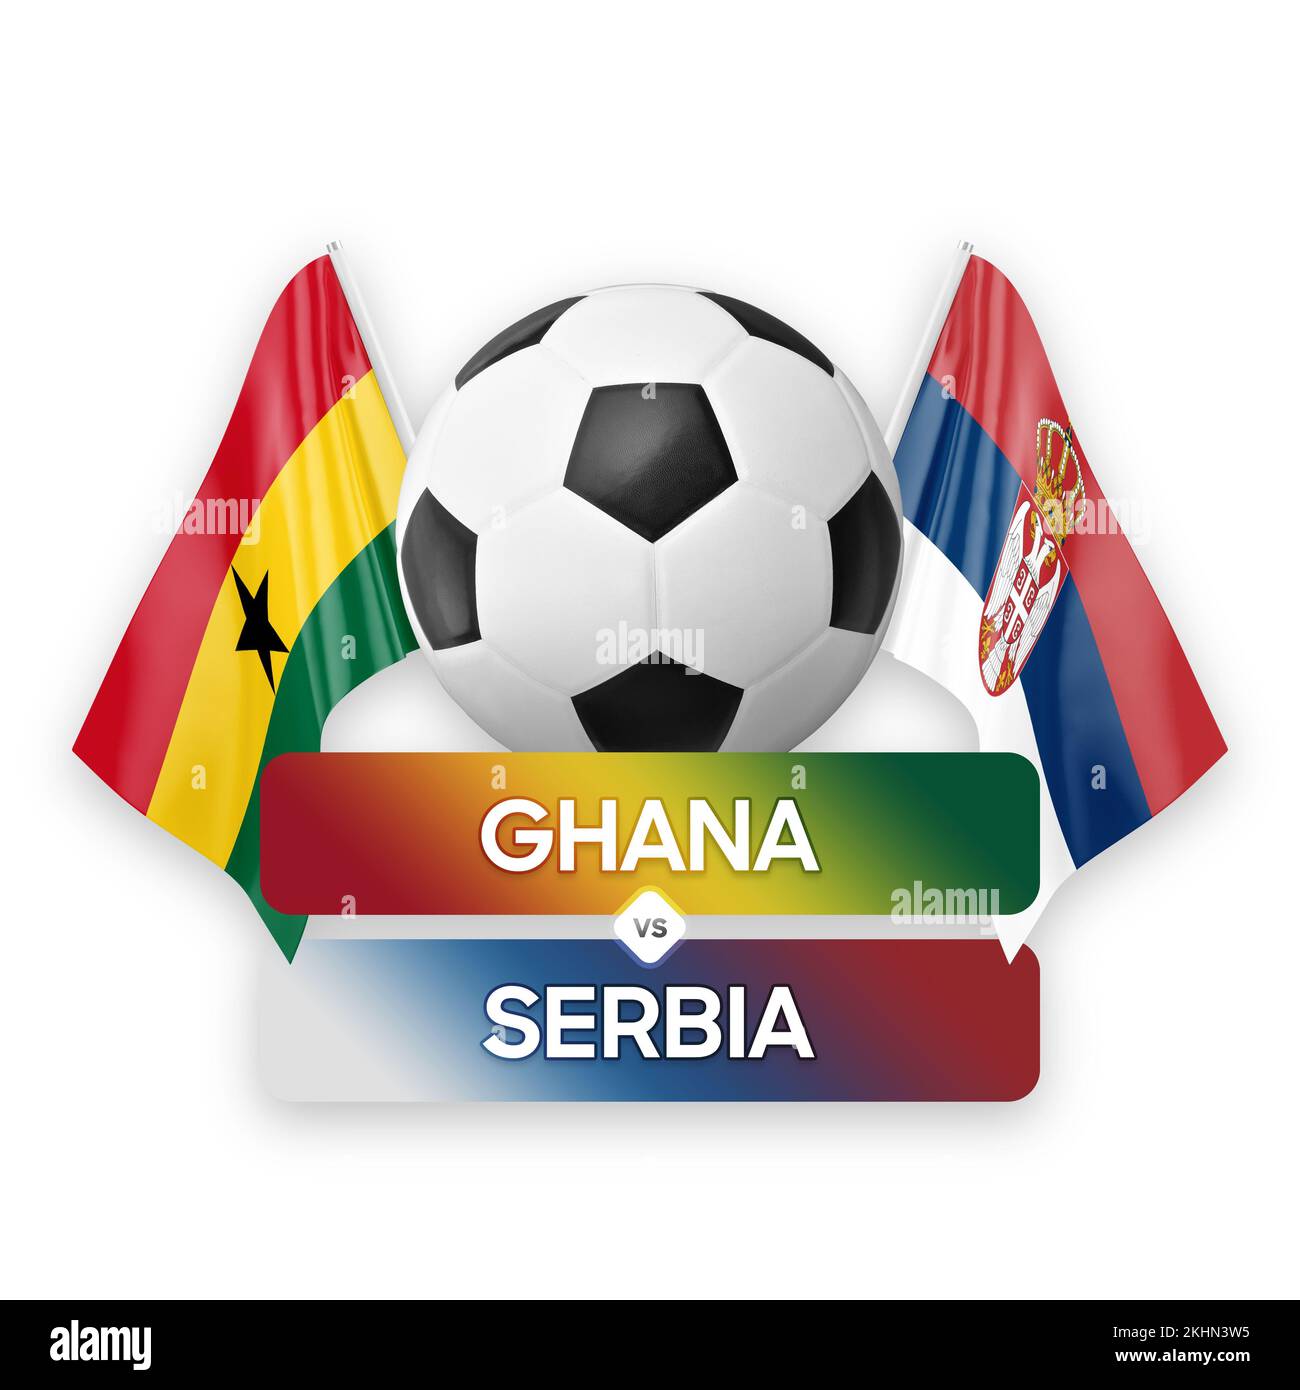 Ghana vs Senegal national teams soccer football match competition concept. Stock Photo